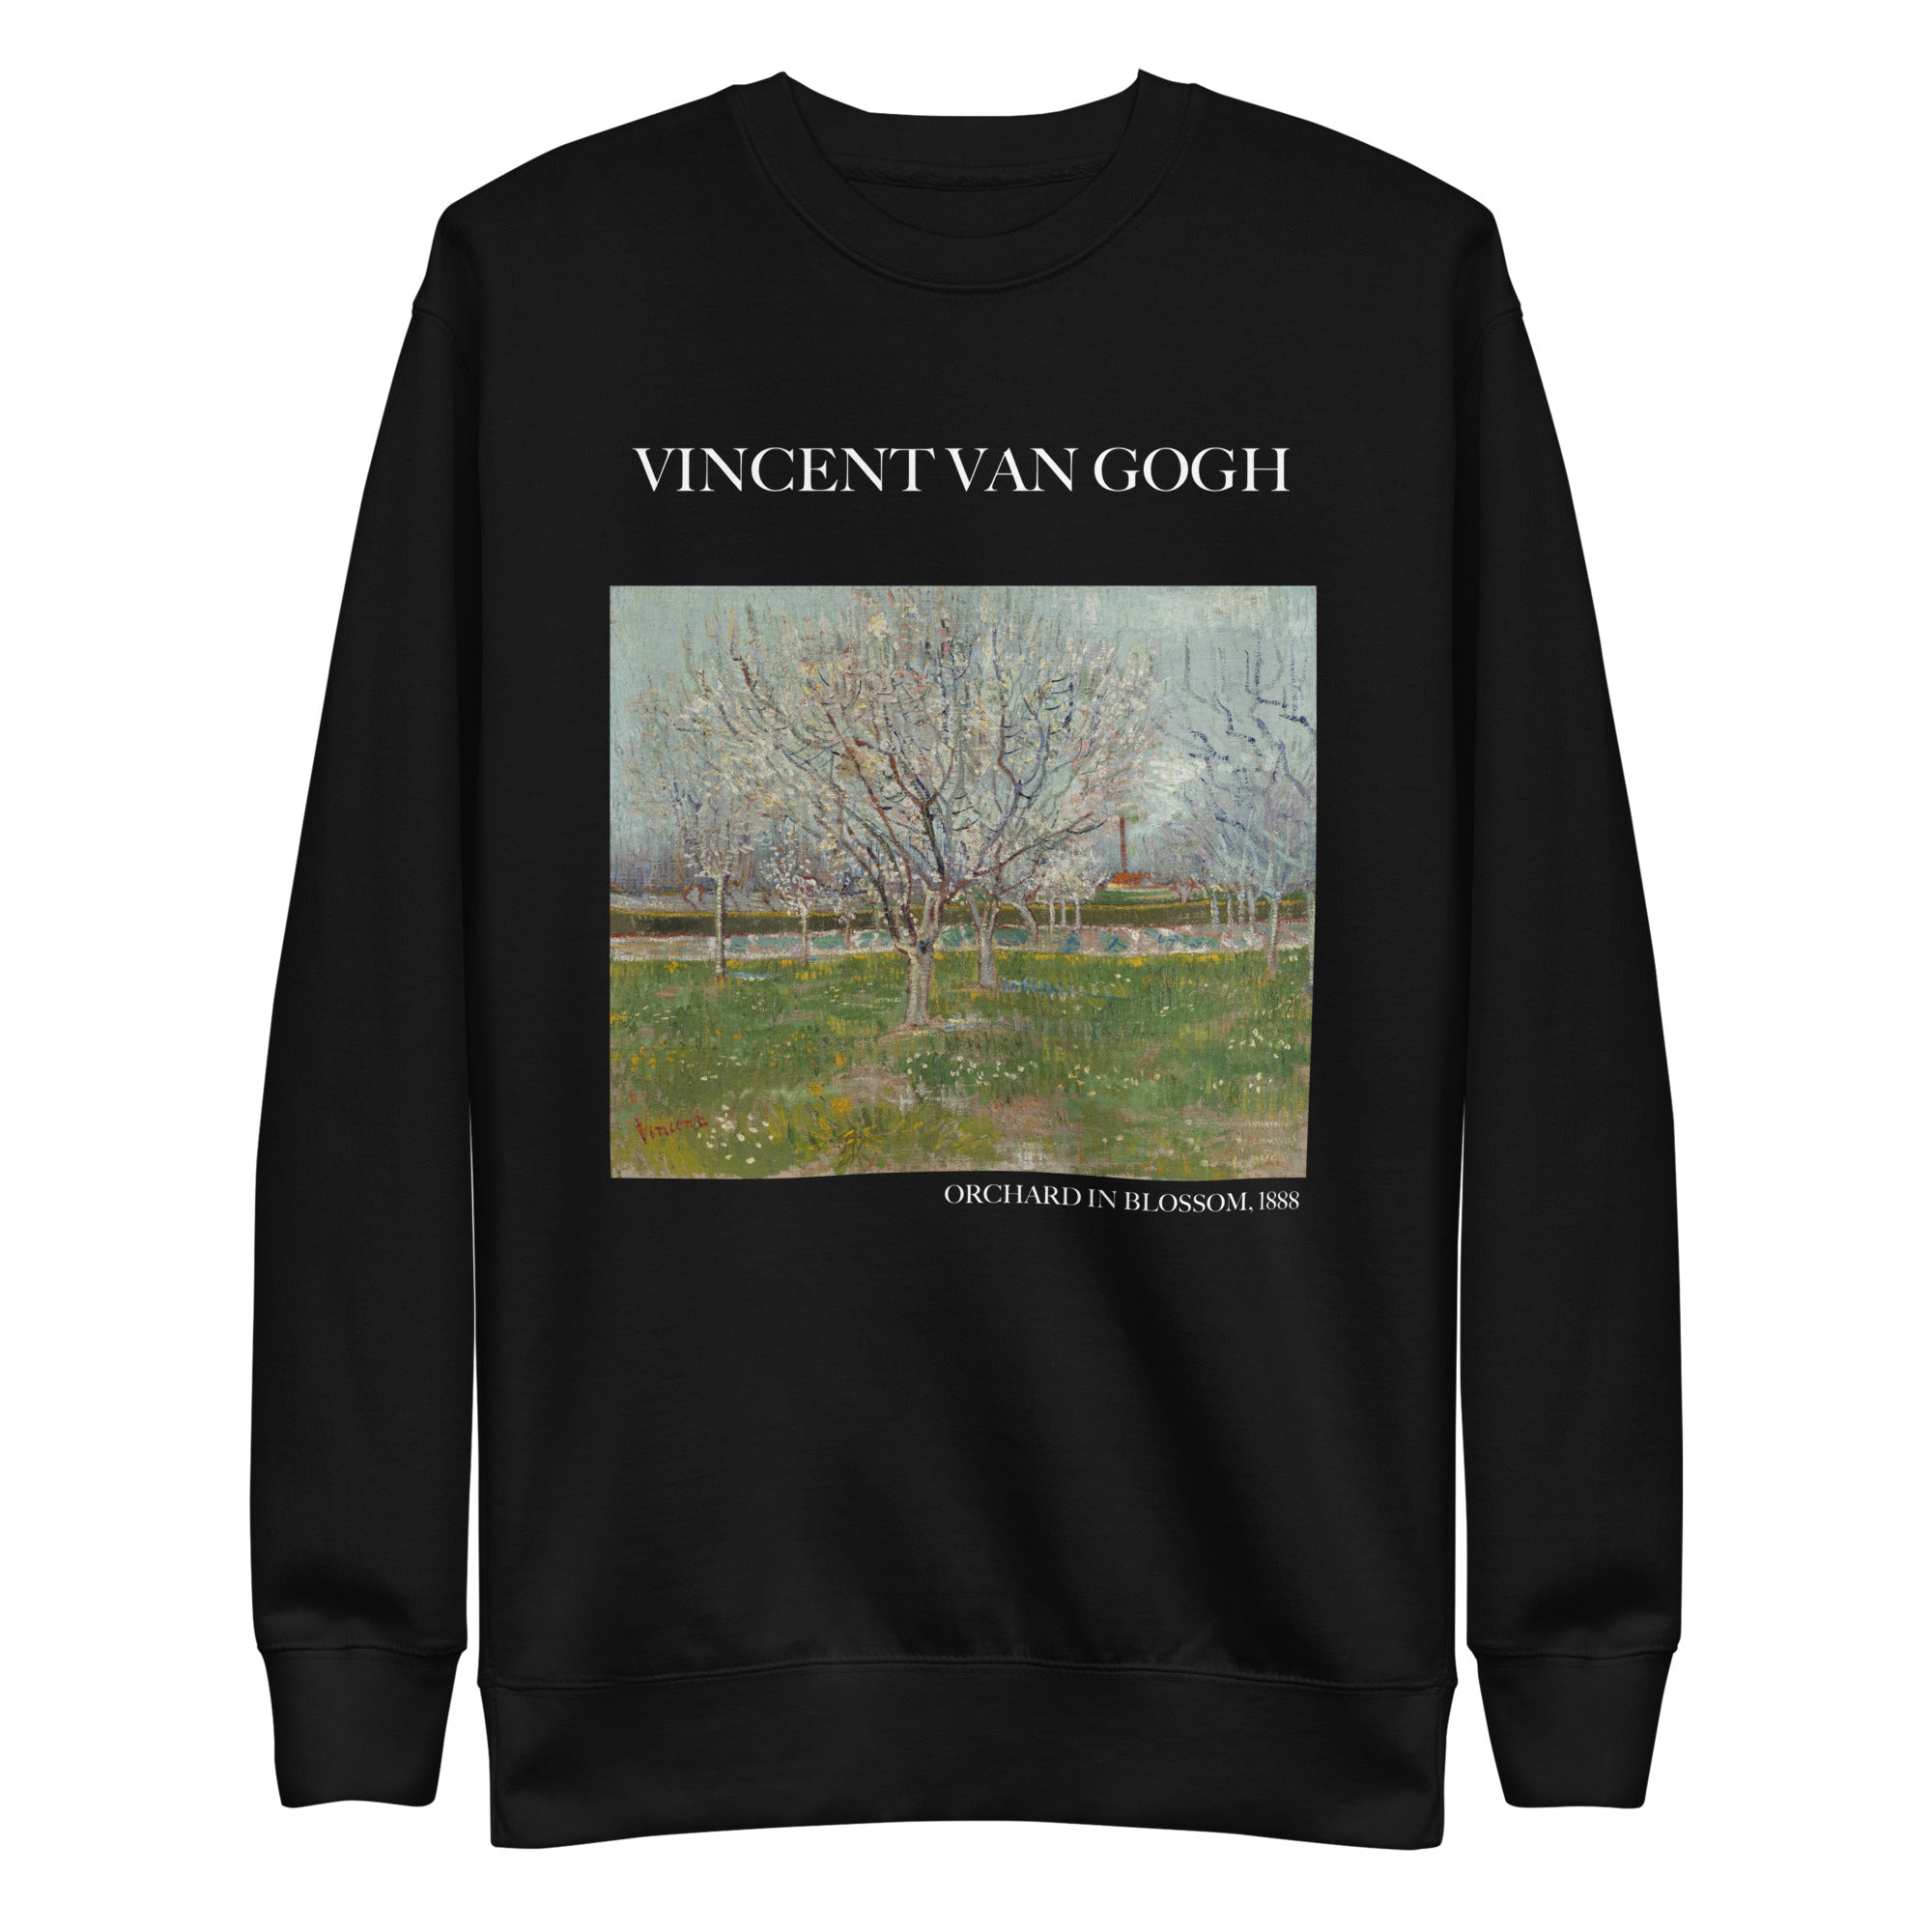 Vincent van Gogh 'Orchard in Blossom' Famous Painting Sweatshirt | Unisex Premium Sweatshirt